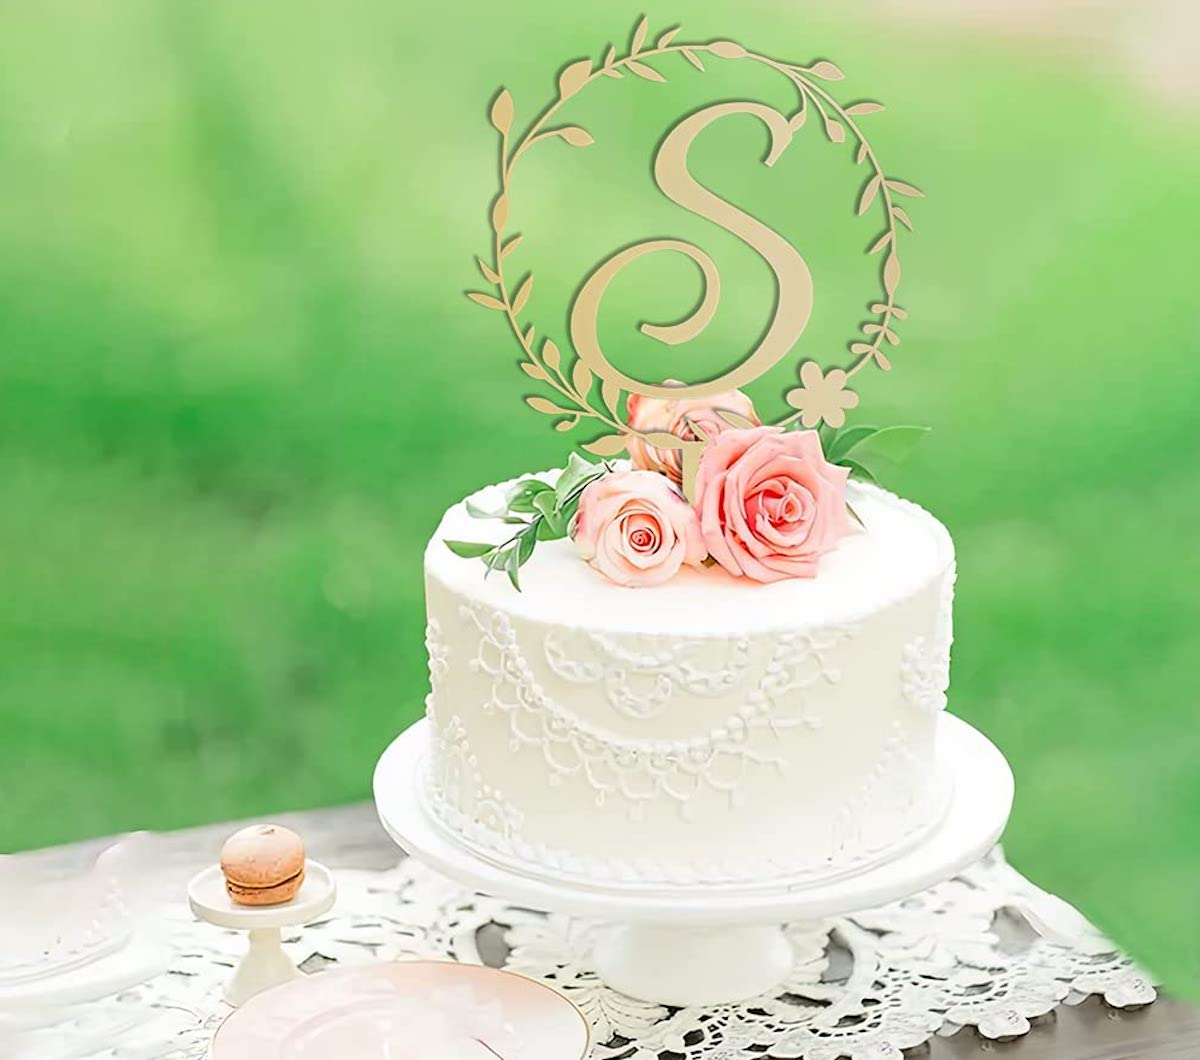 Creative One-Tier Wedding Cake Ideas That Really Take The Cake